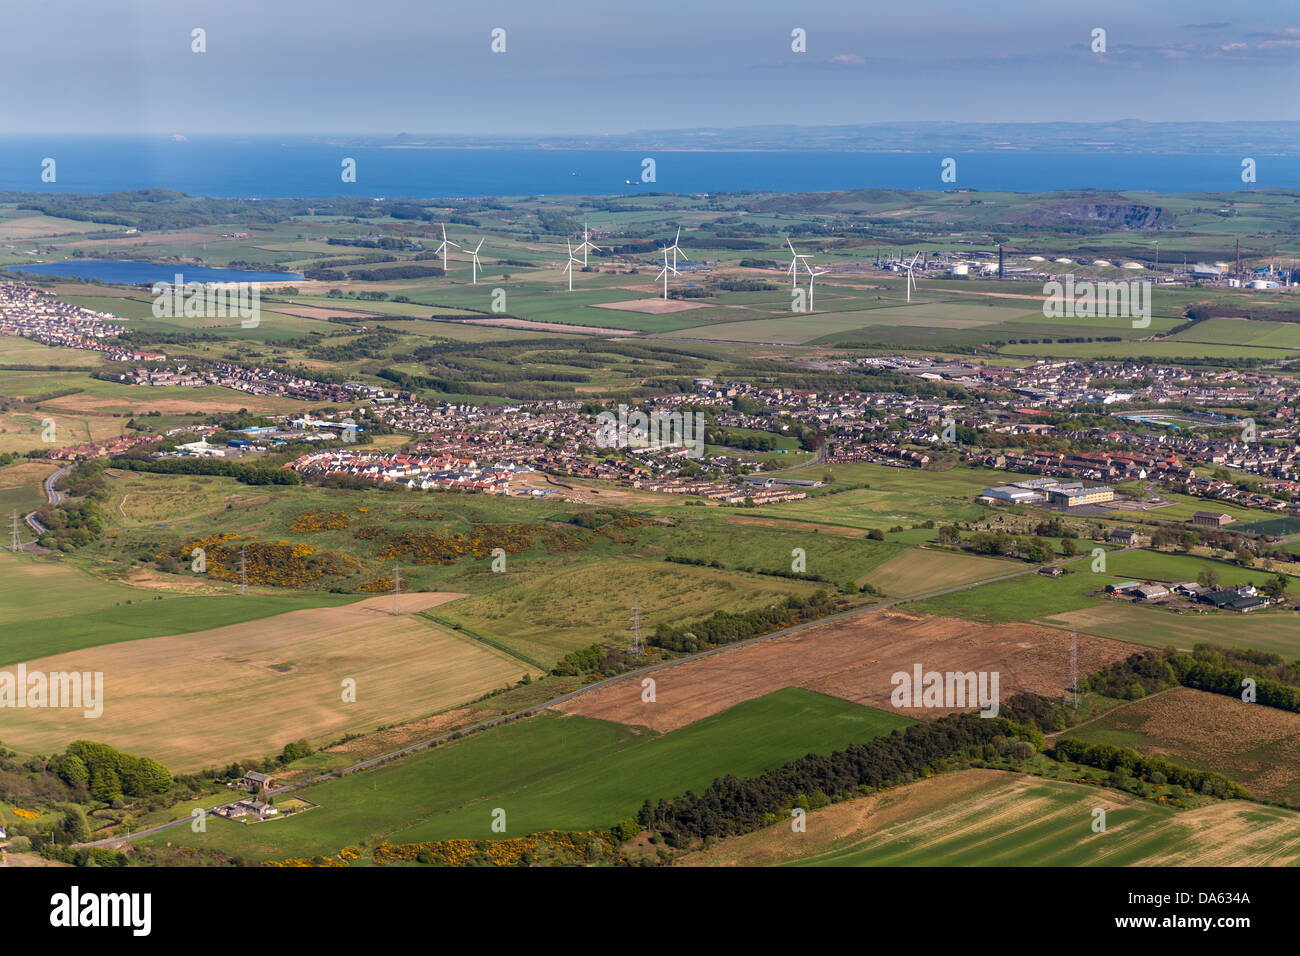 Windpark in Fife mit dem Firth of Forth und East Lothian in der Ferne - Luftbild Stockfoto